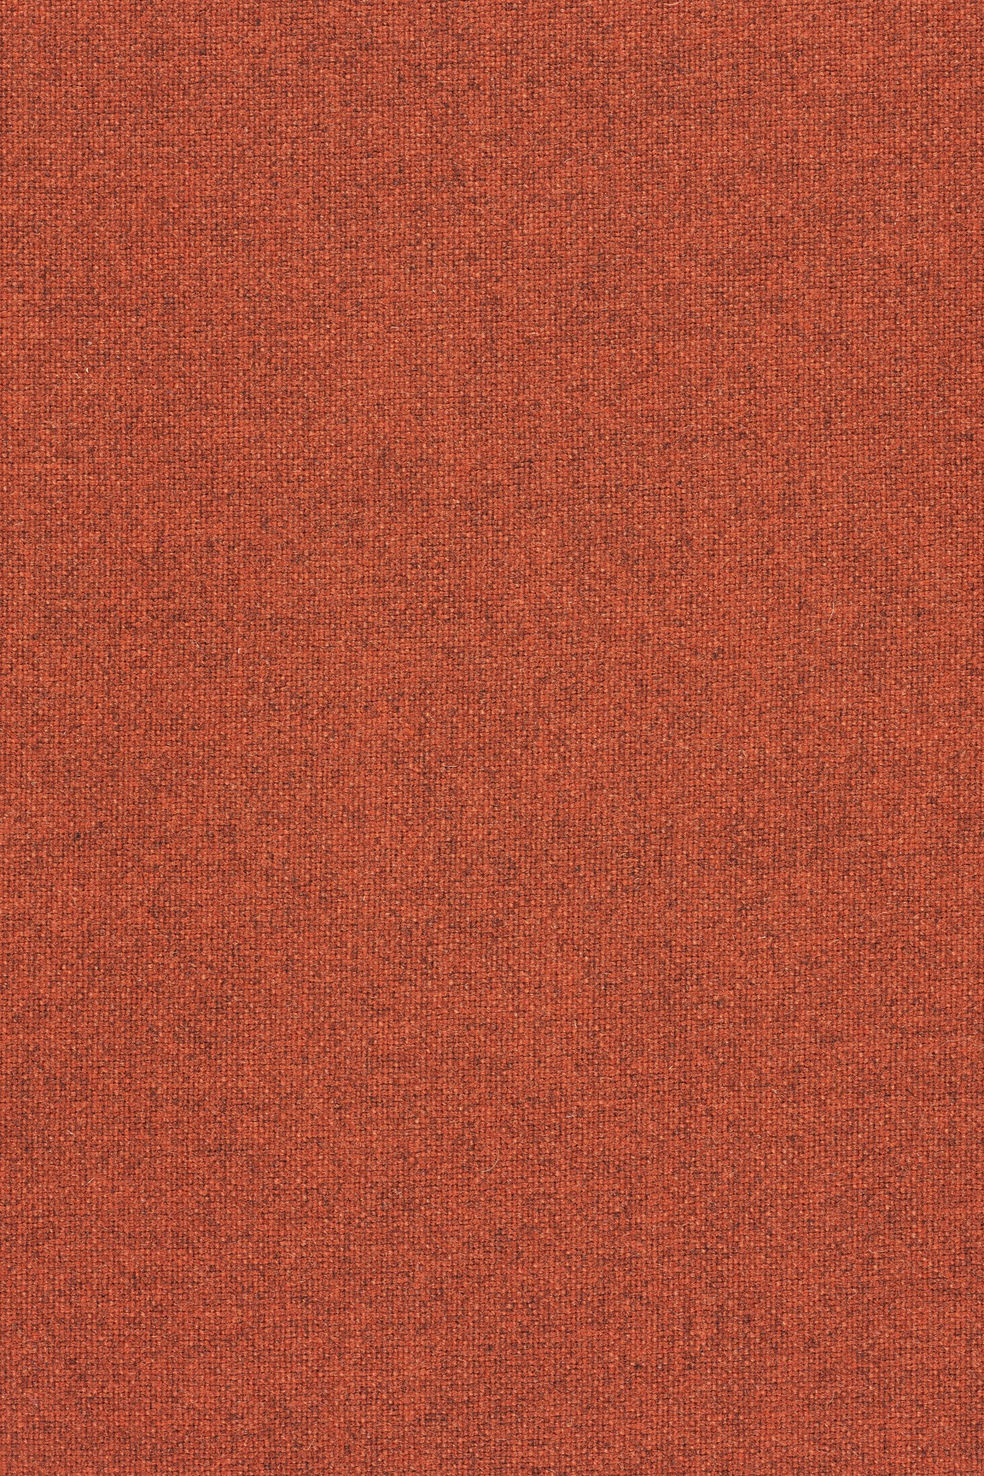 Fabric sample Tonica 2 531 orange